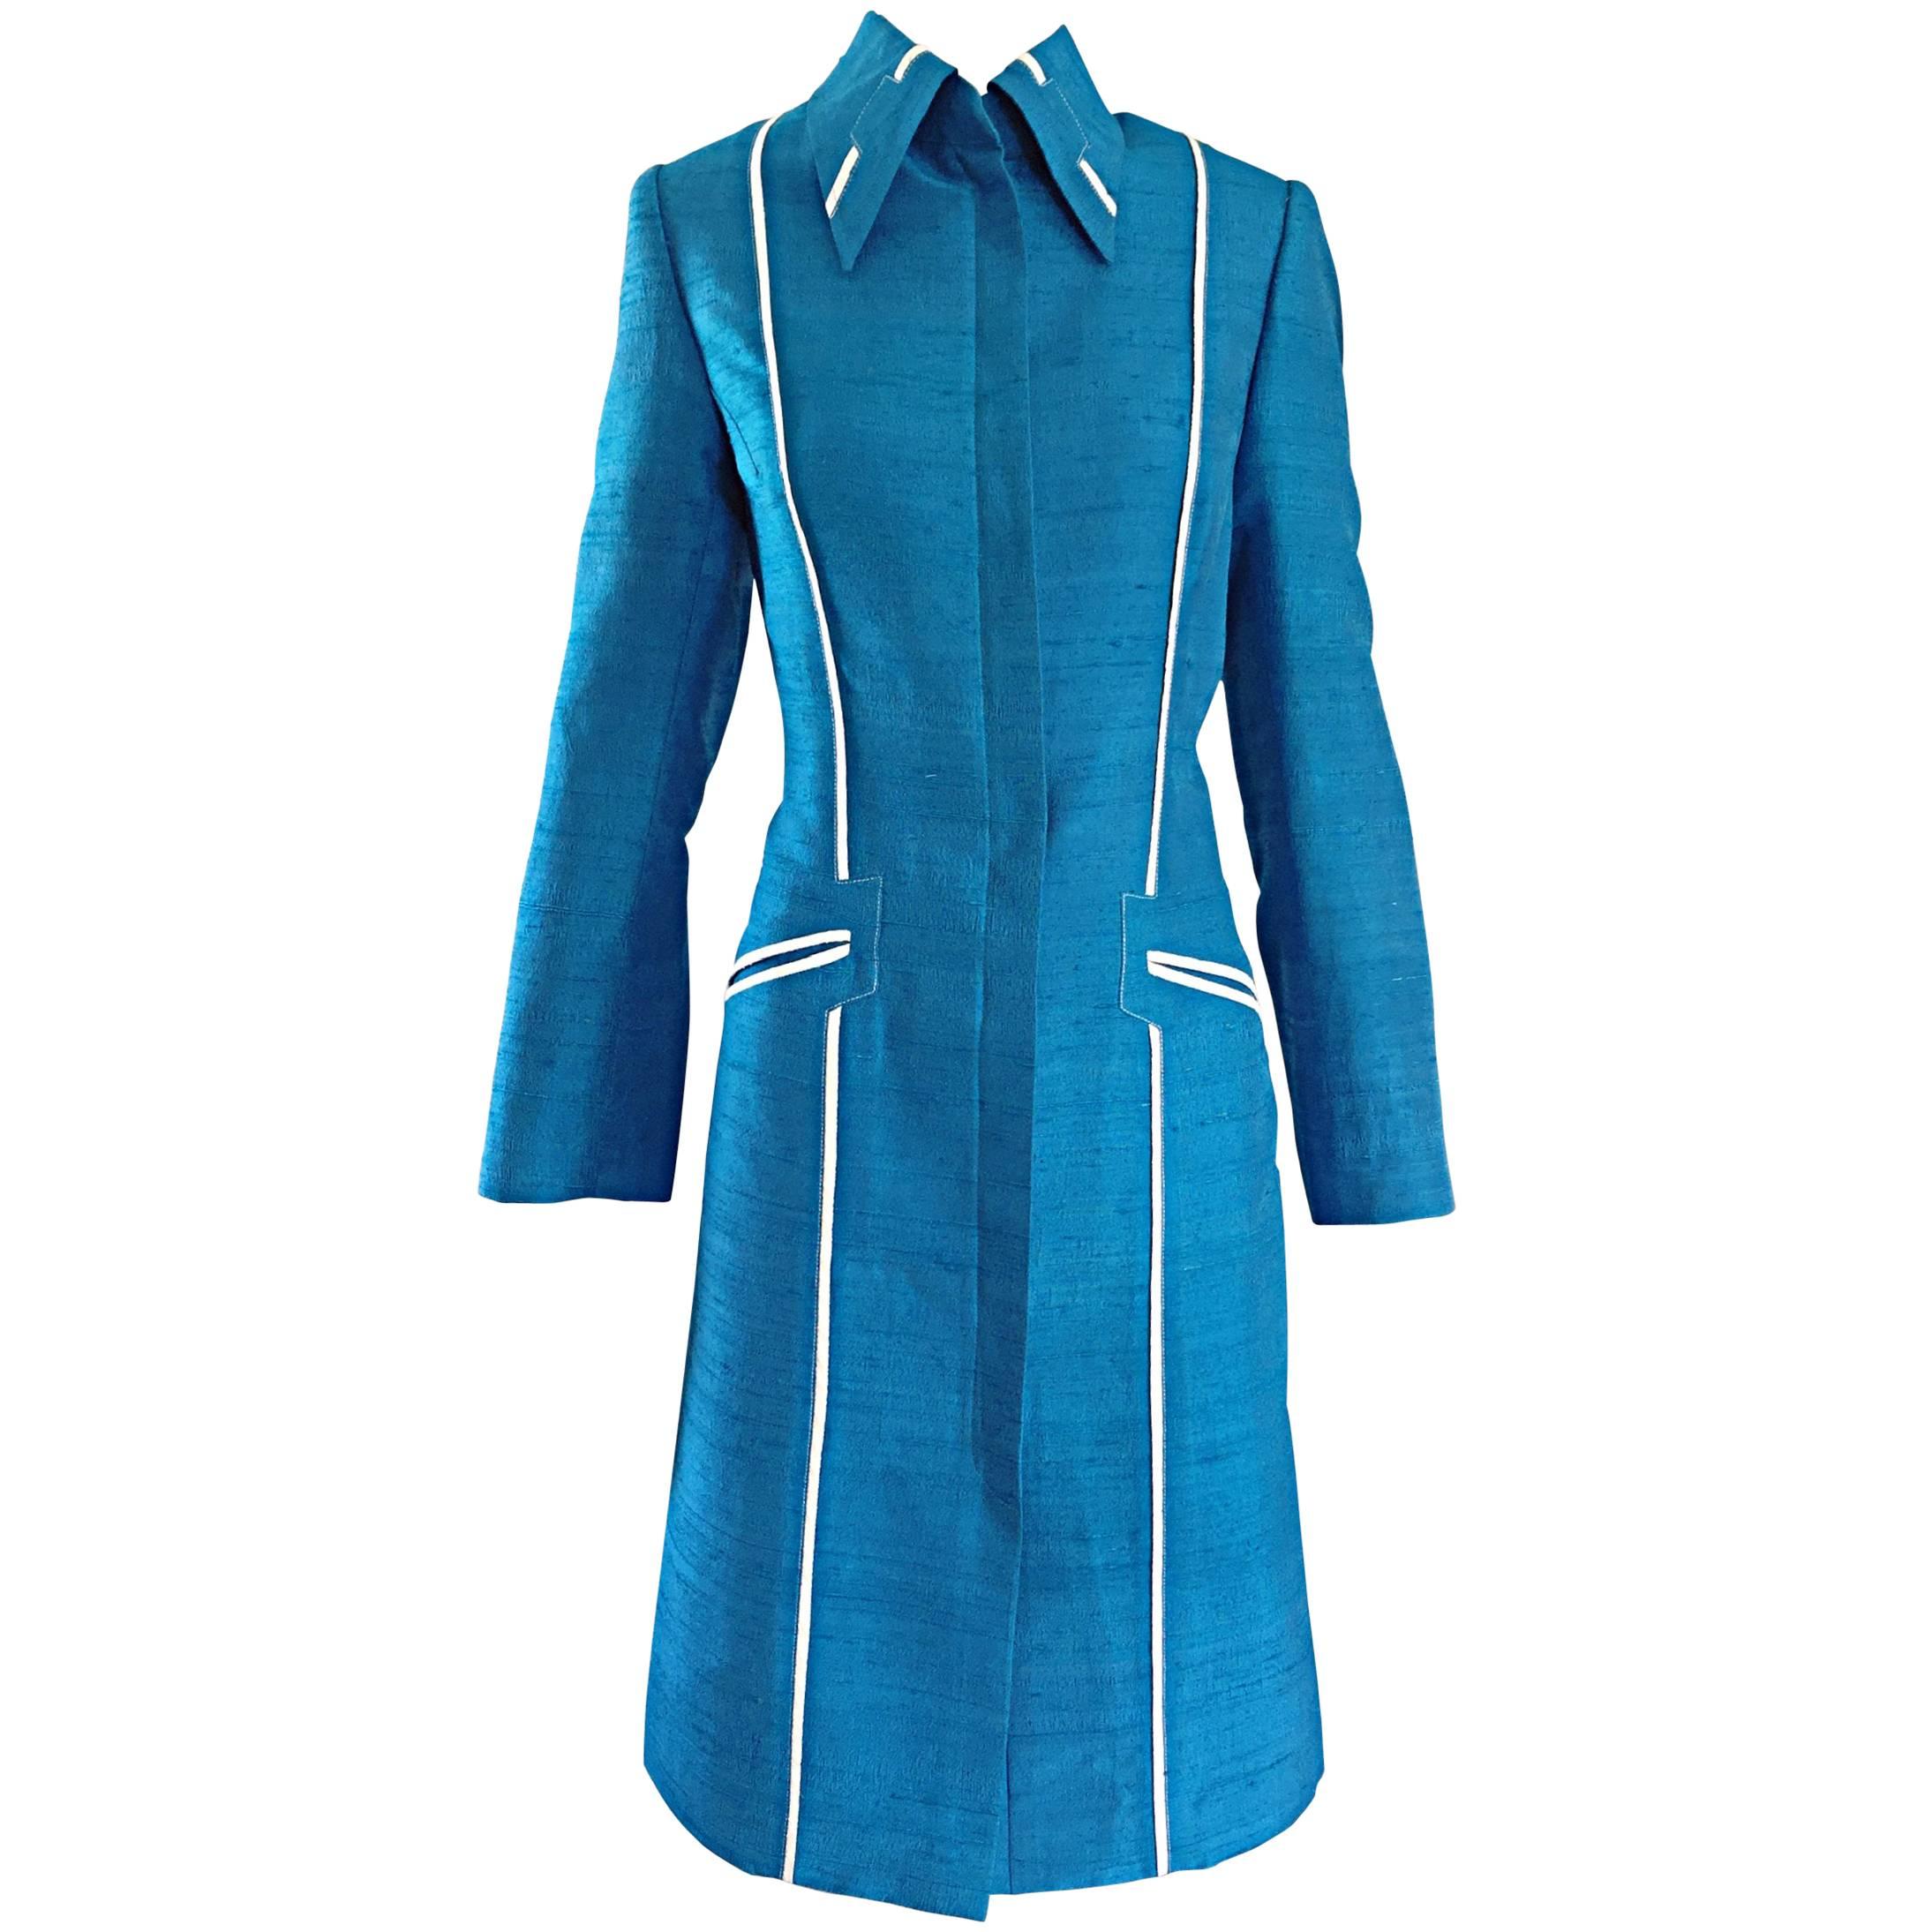 Max Nugas Haute Couture Vintage Cerulean Blue Silk Shantung Jacket Coat, 1970s